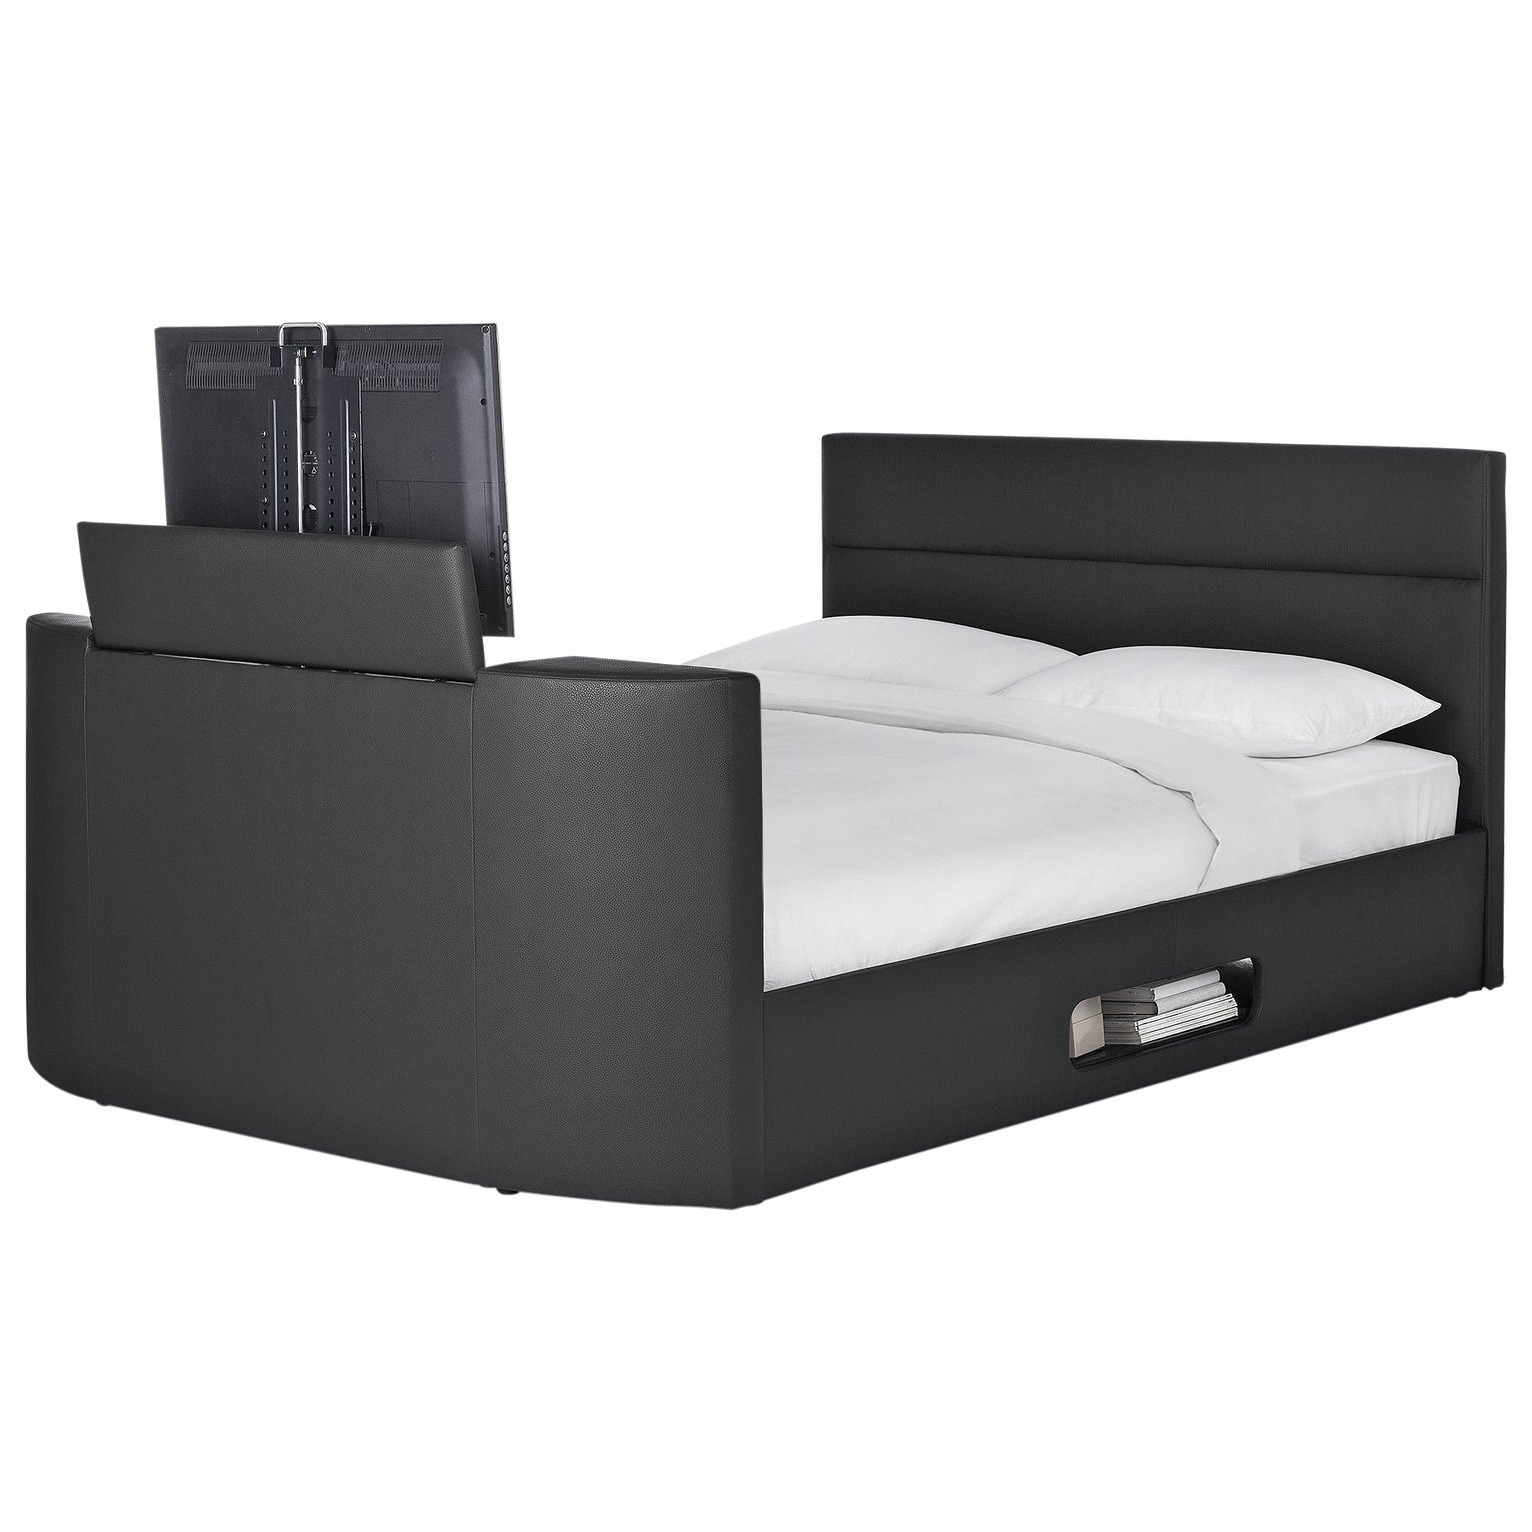 Argos Home Gemini Kingsize TV Bed Frame - Black - image 1